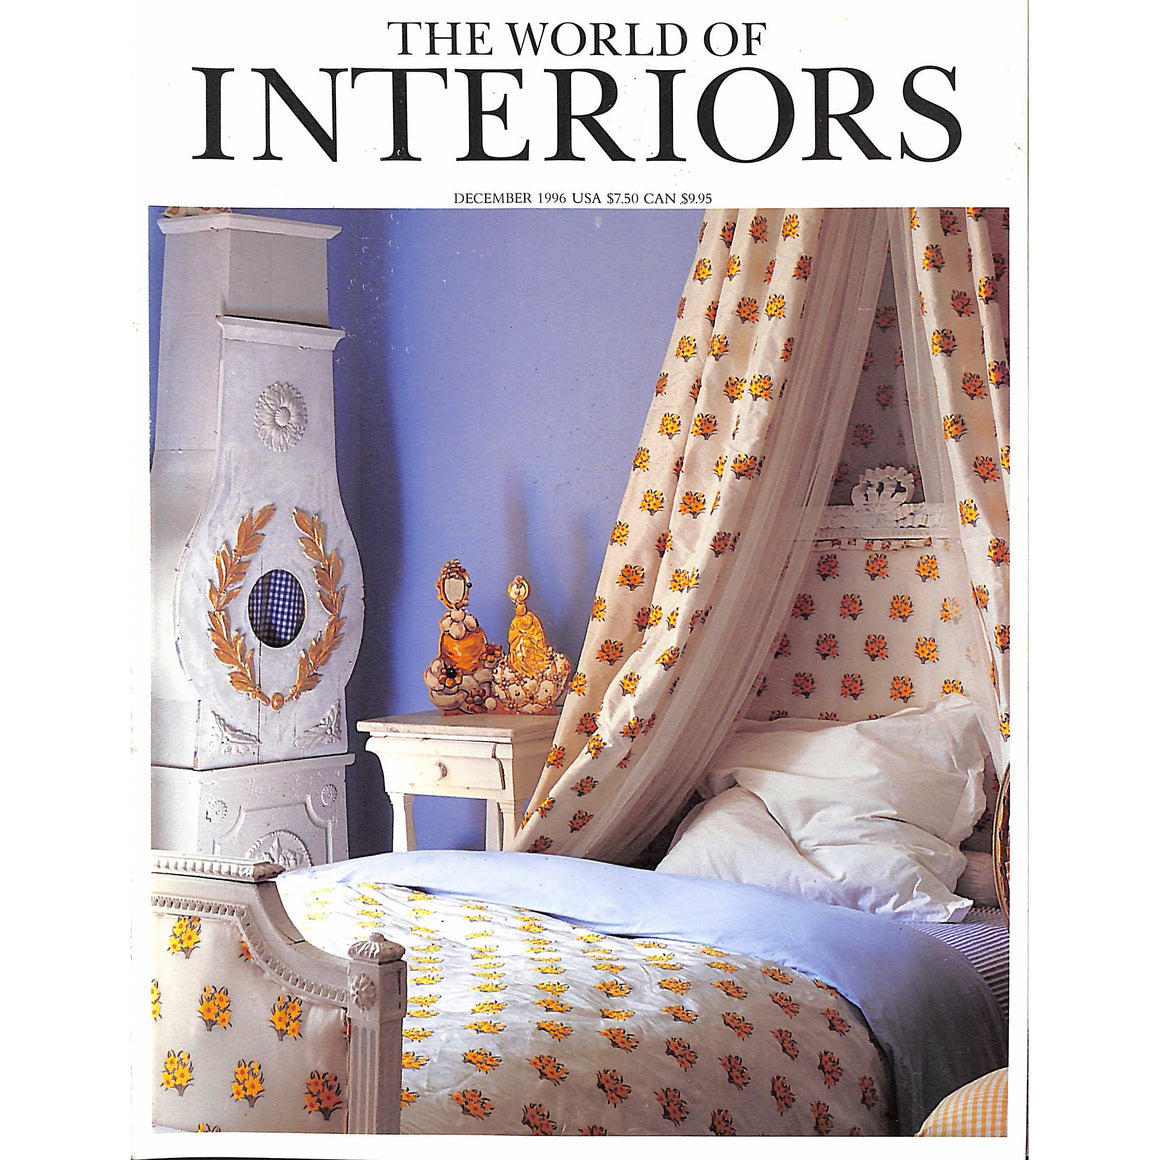 The World of Interiors December 1996